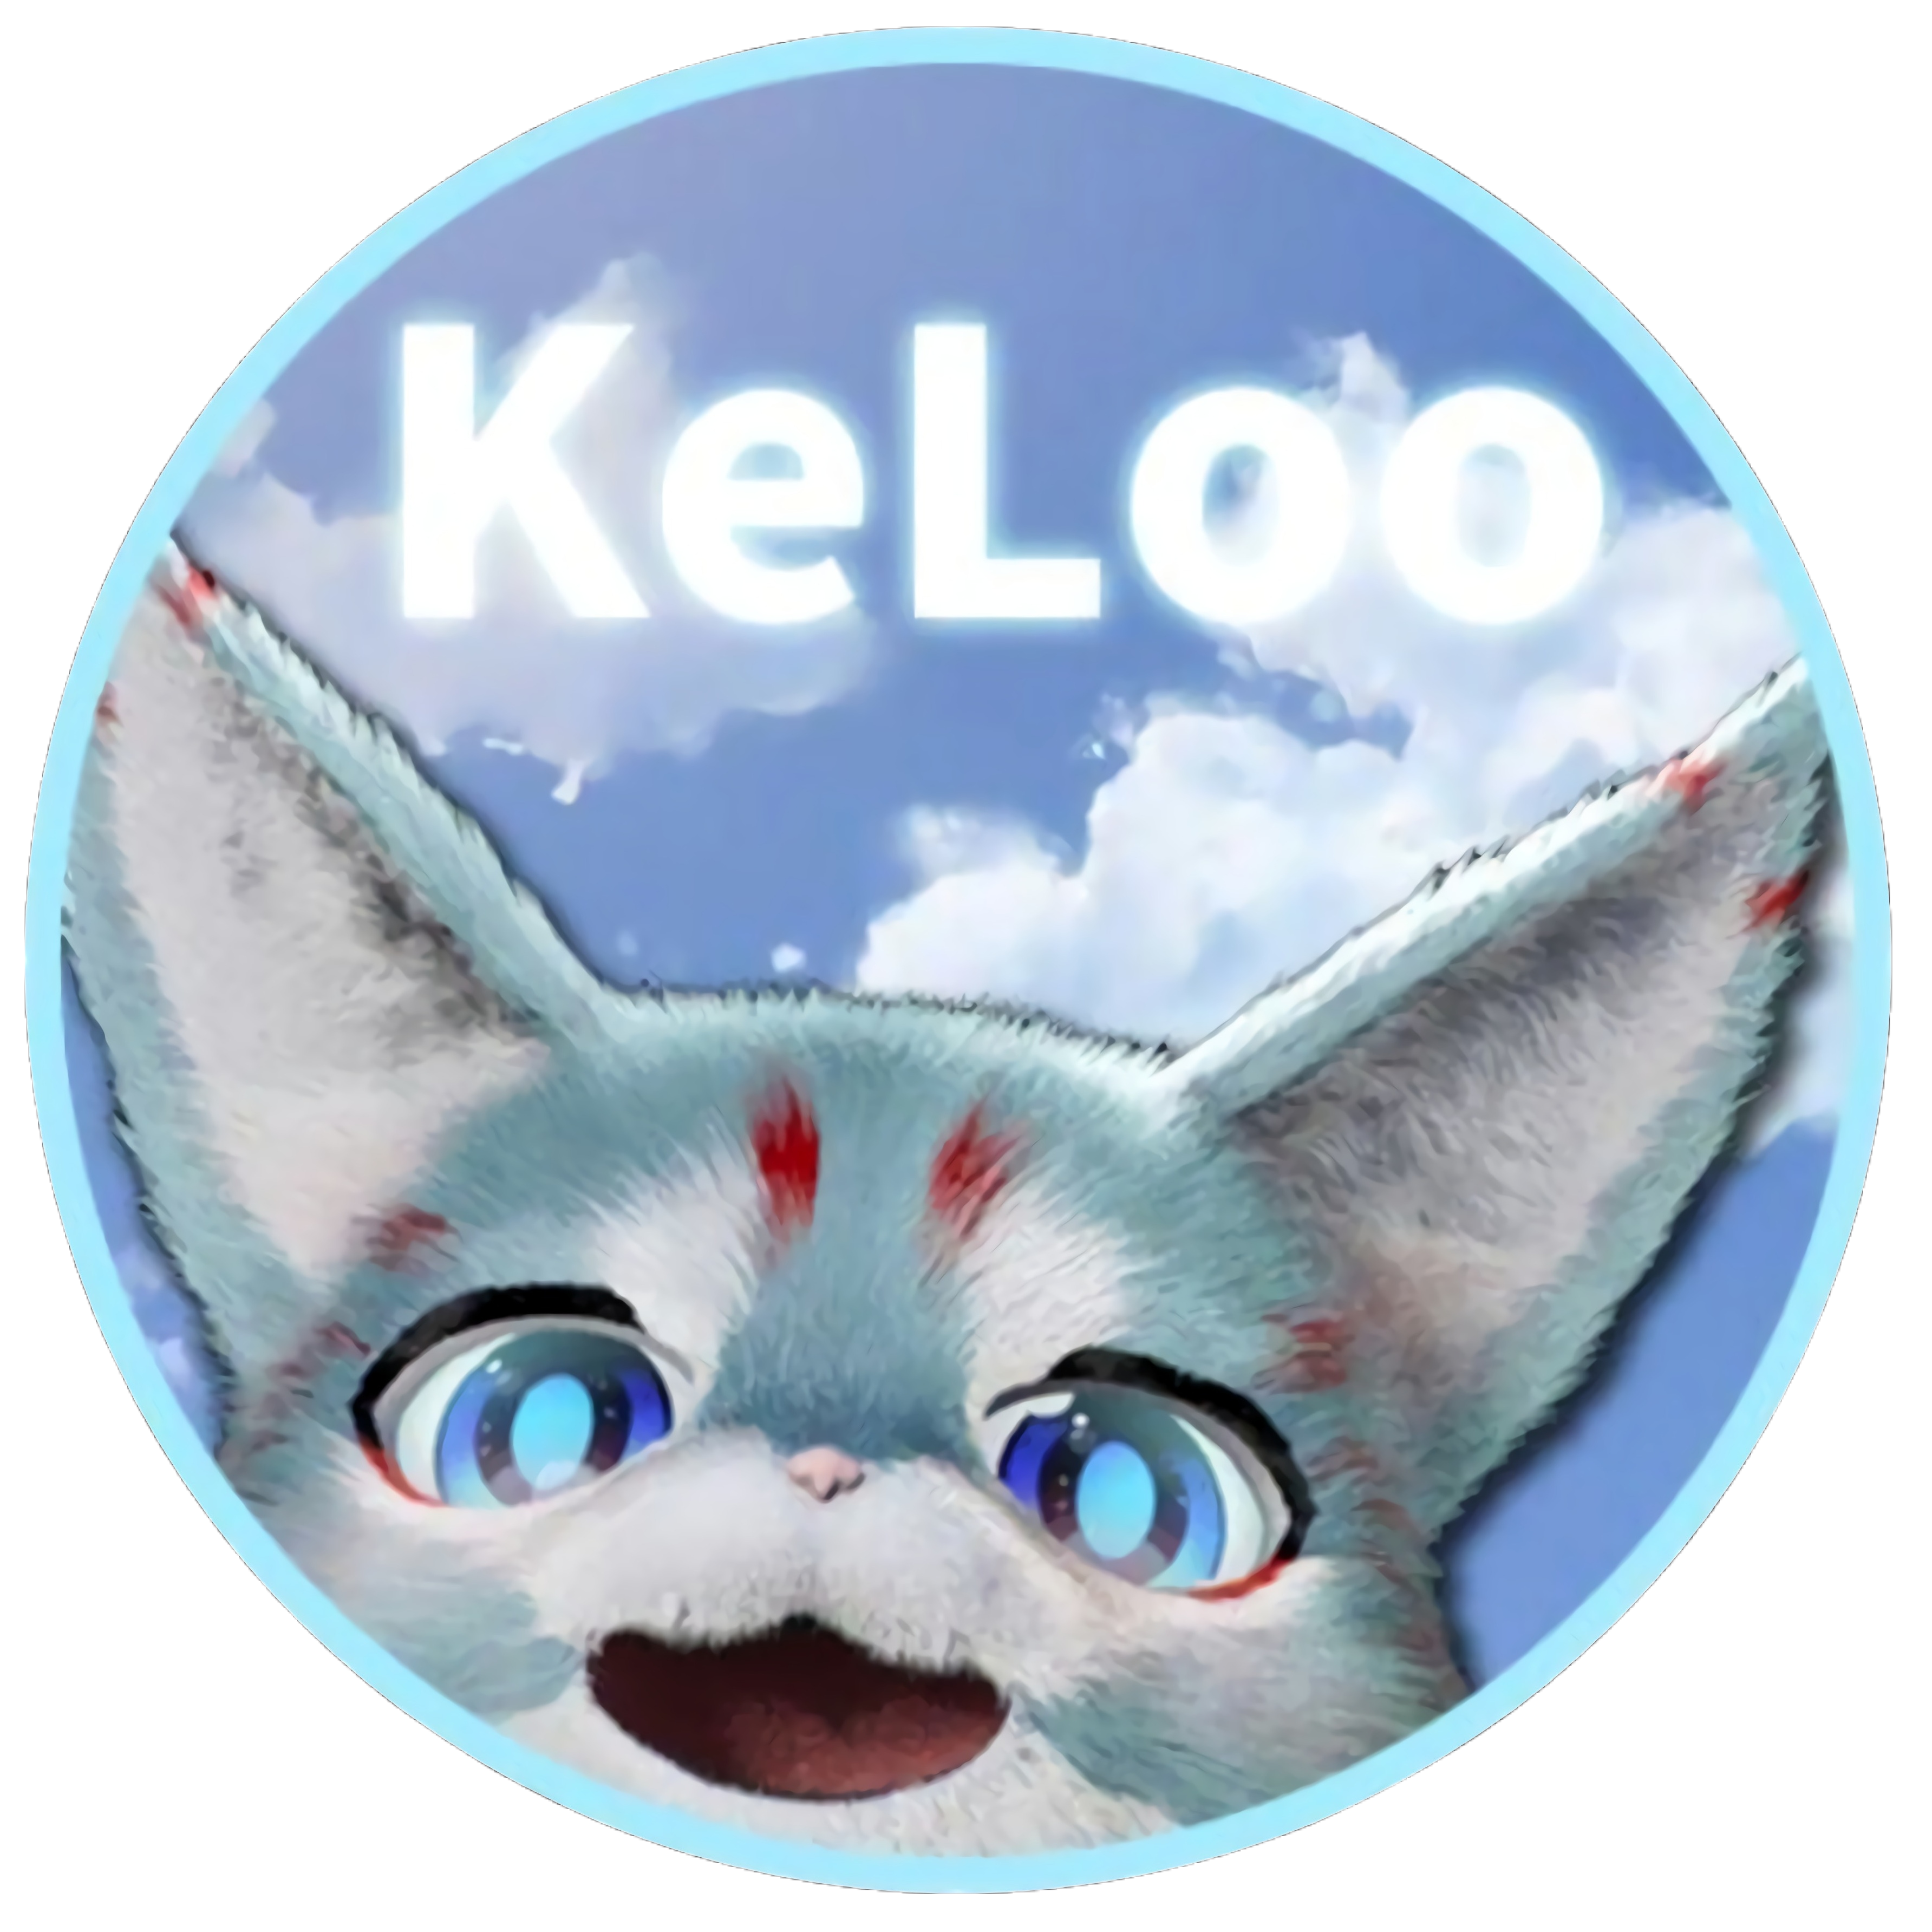 克洛KeLoo-TOP1.png